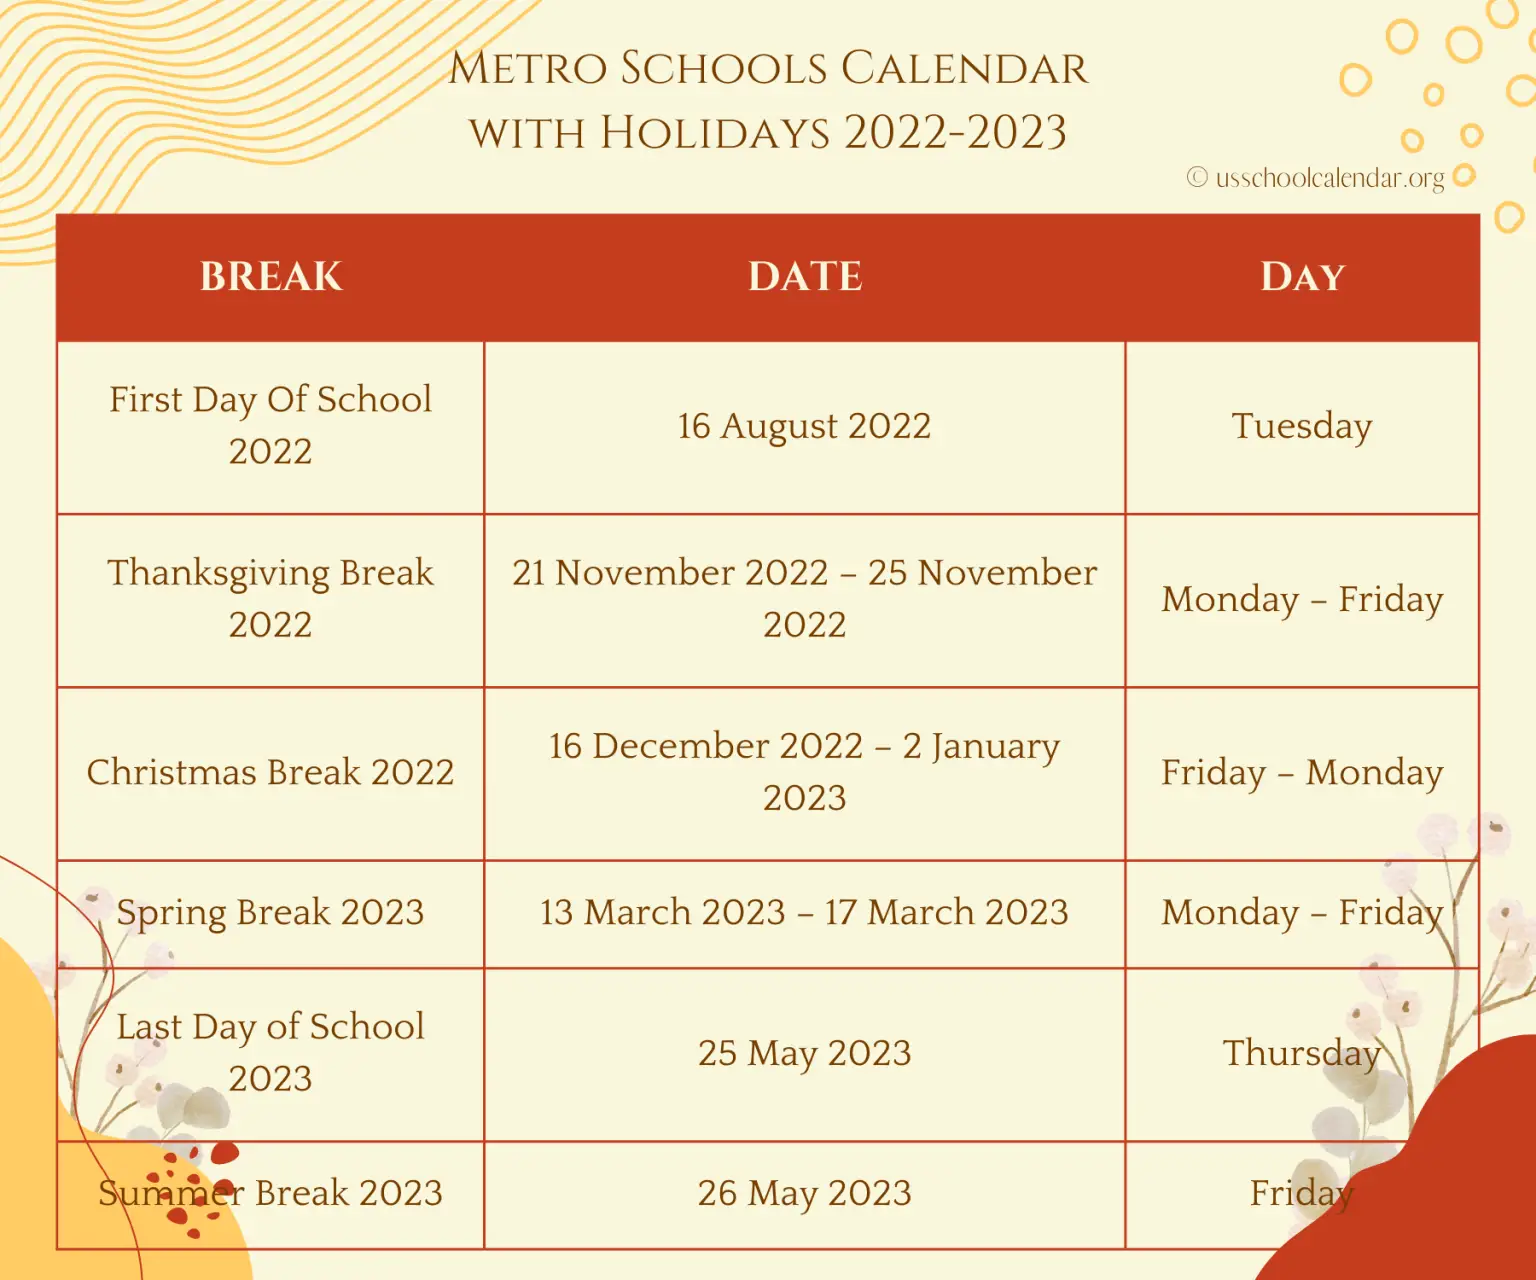 Metro Schools Calendar with Holidays 20222023